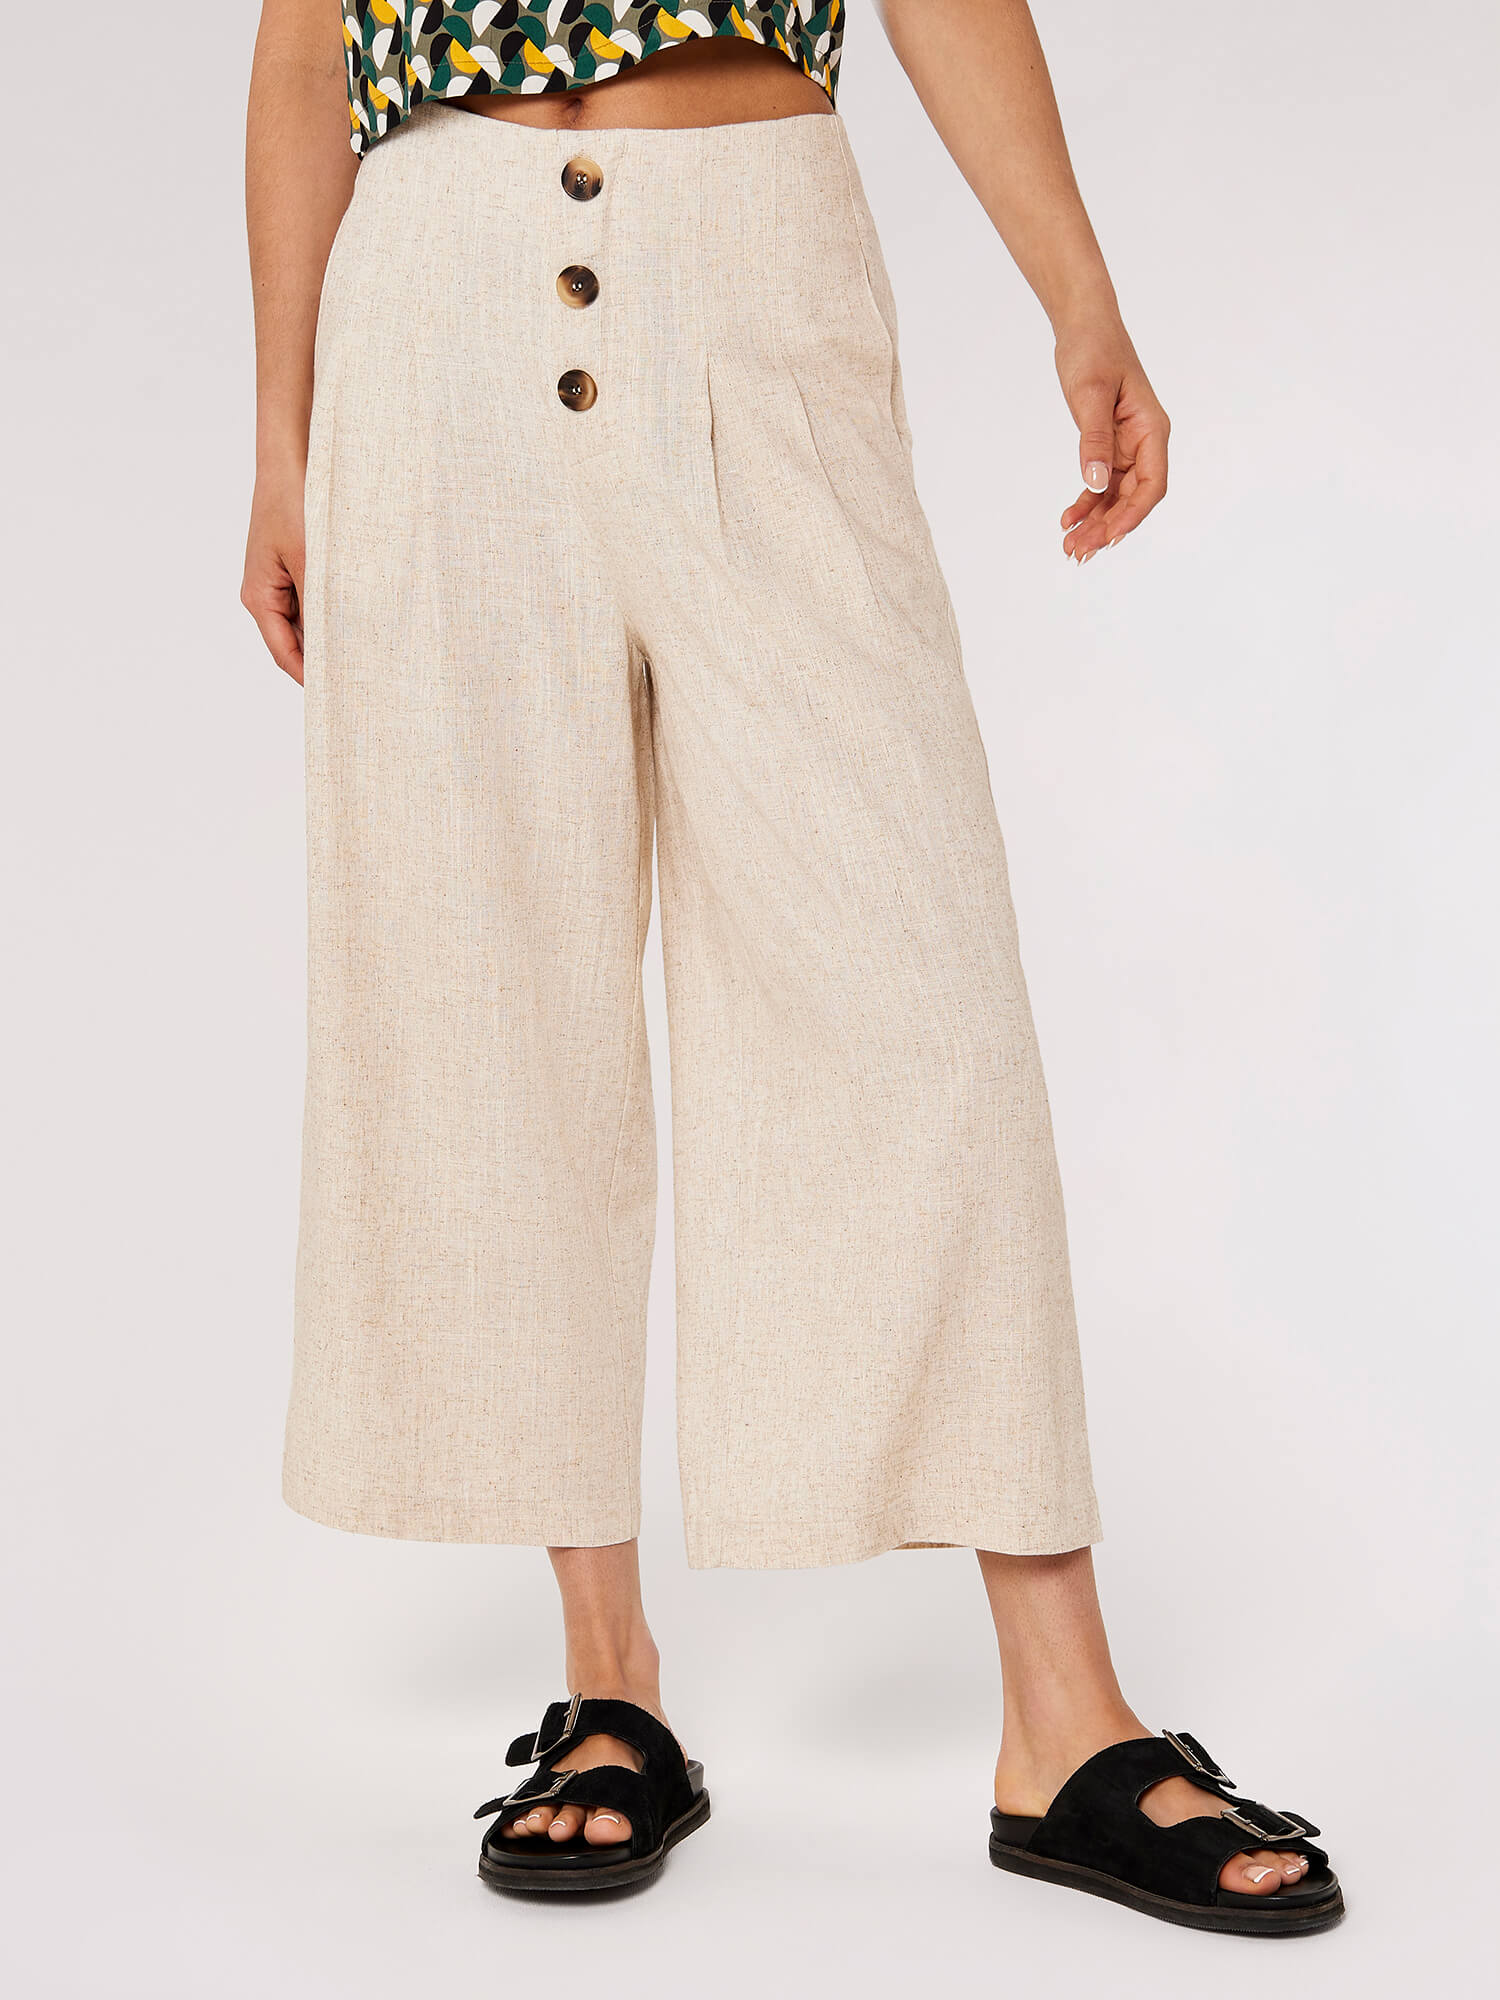 Linen Mix Culotte | Apricot Clothing